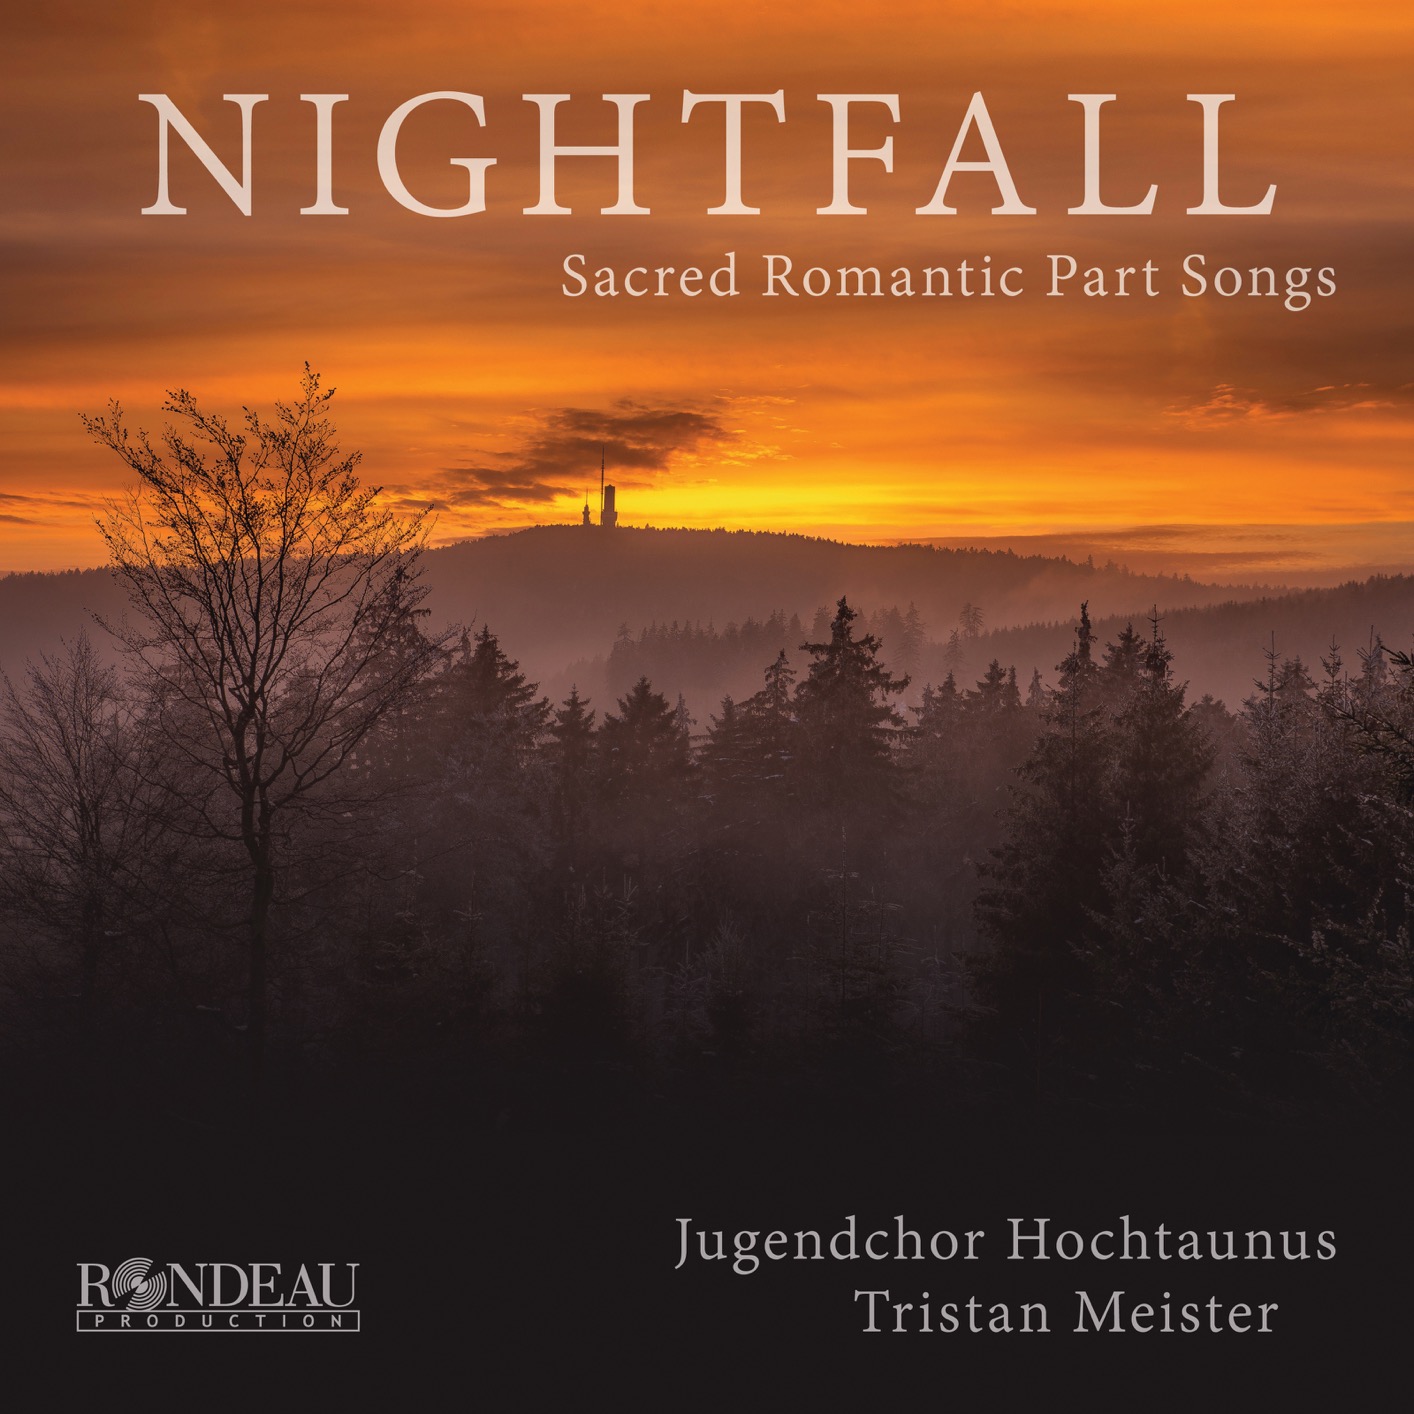 Jugendchor Hochtaunus & Tristan Meister – Nightfall – Sacred Romantic Part Songs (2019) [FLAC 24bit/96kHz]